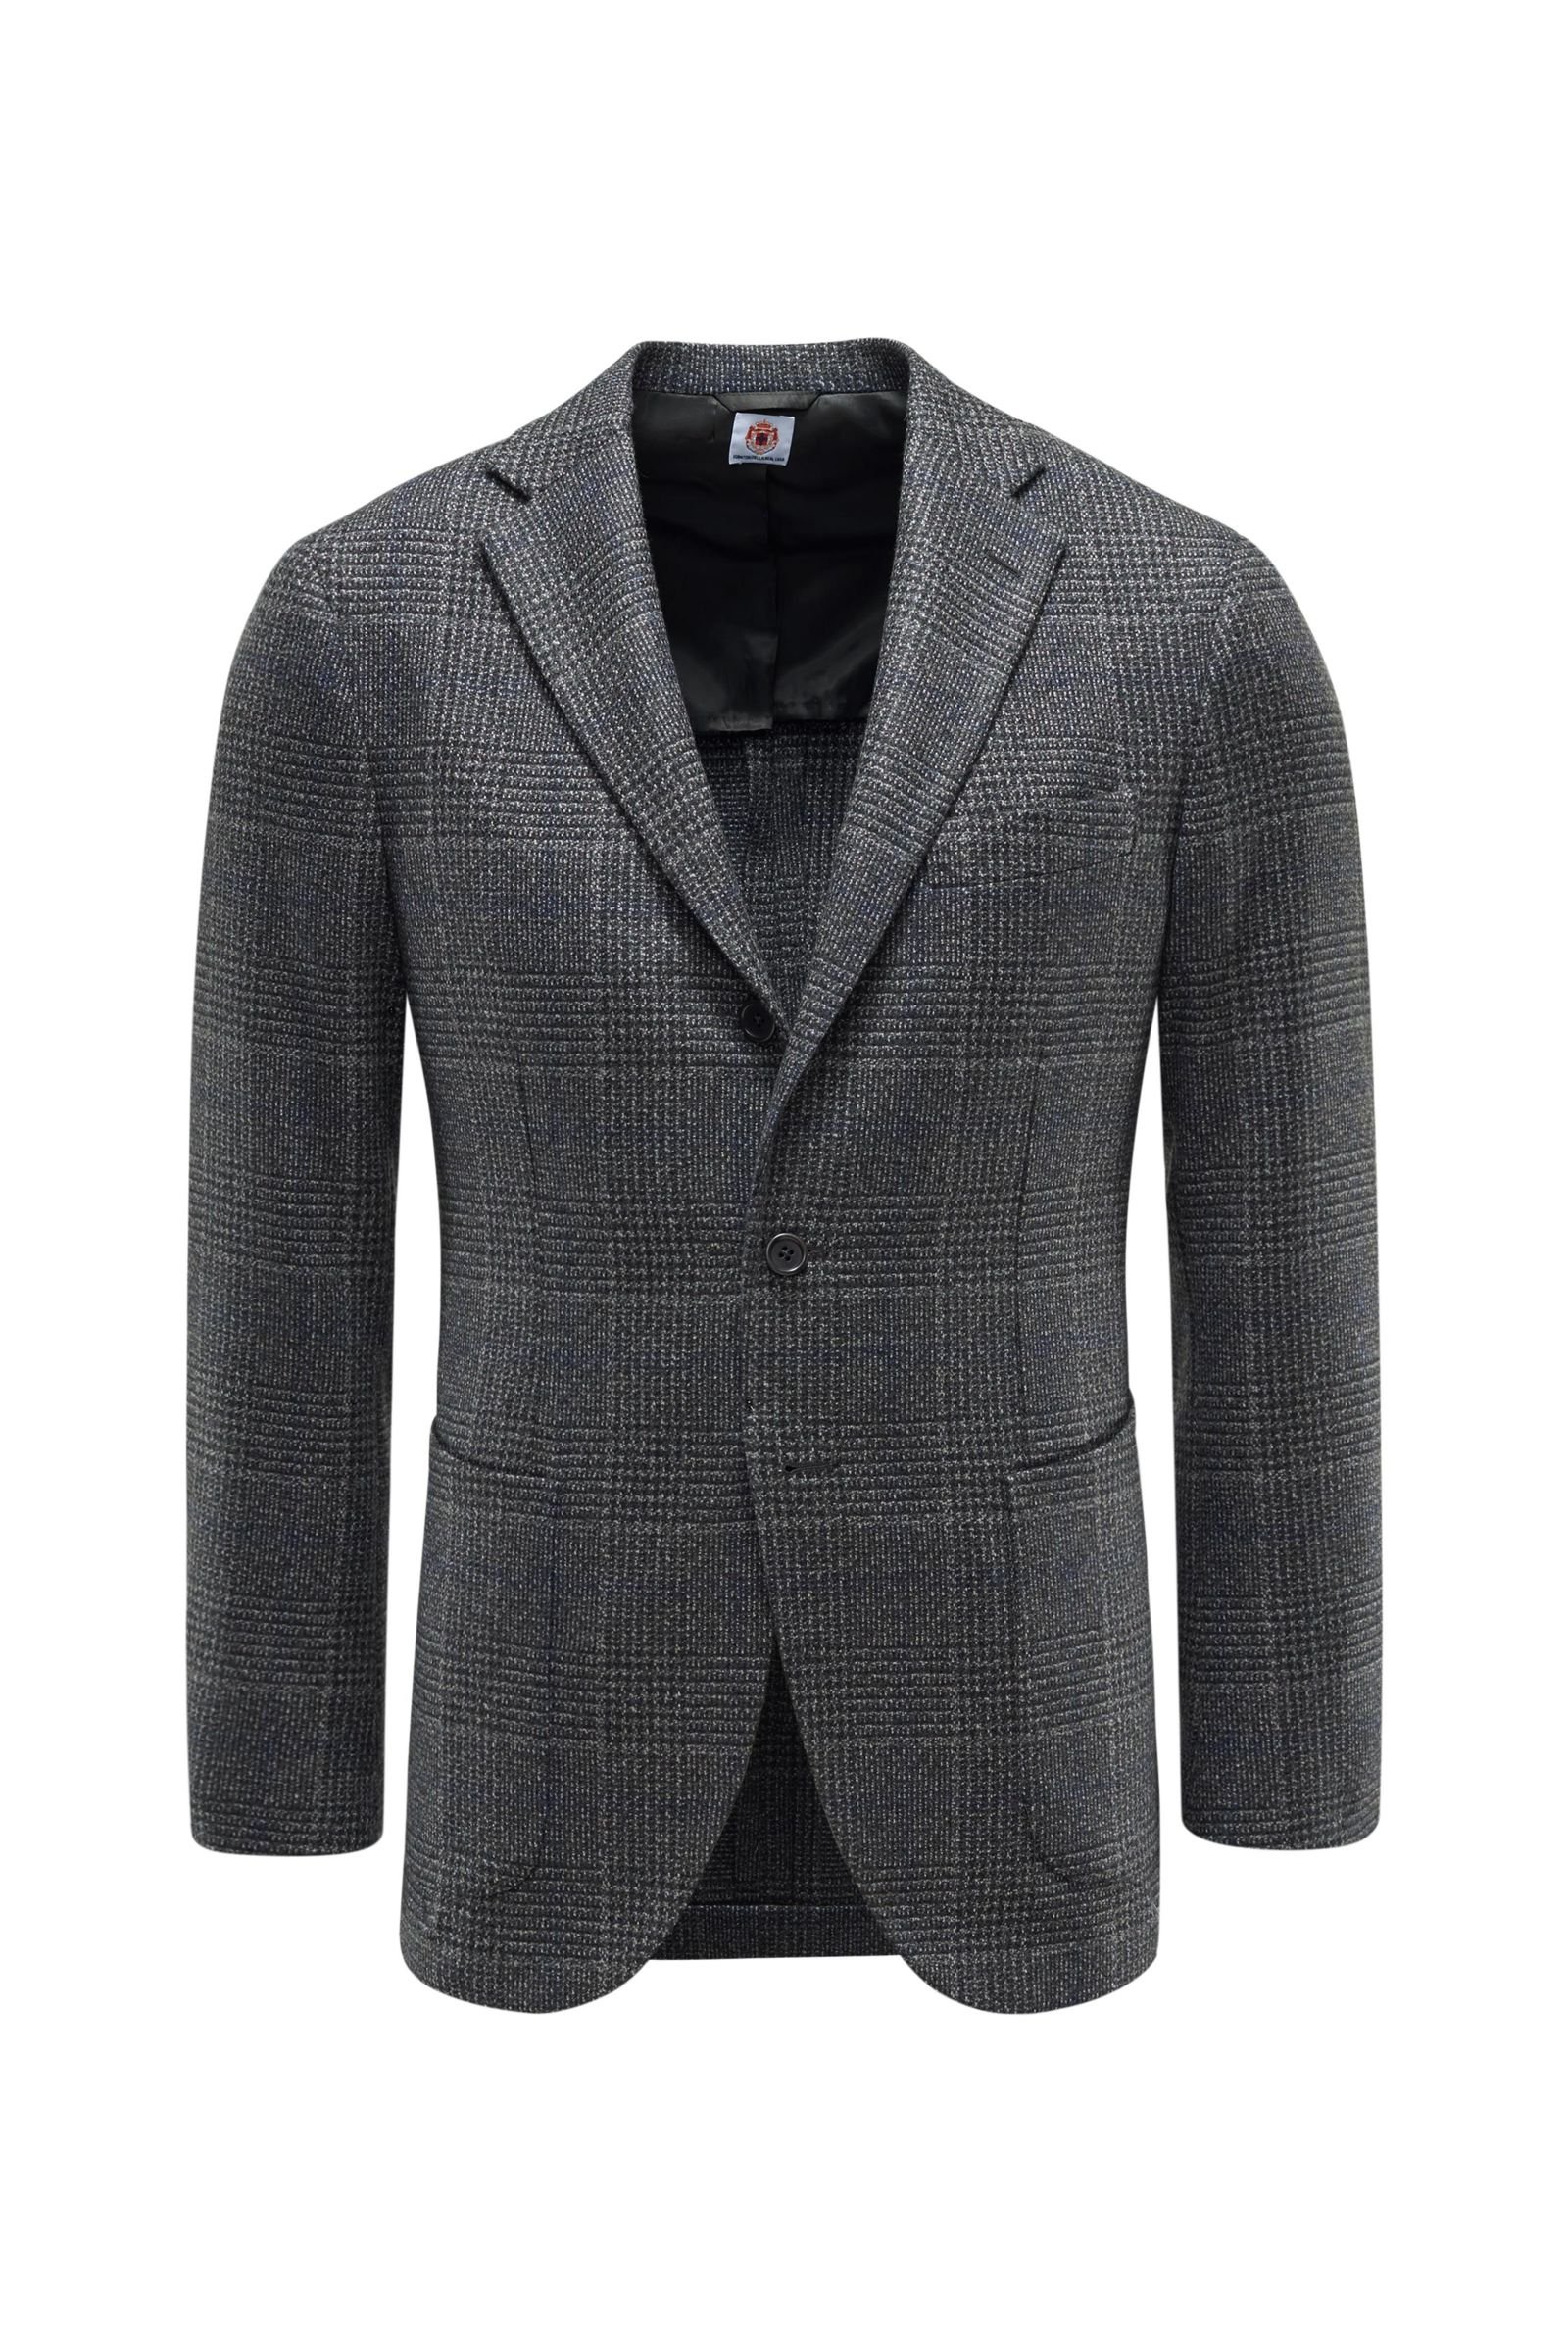 Cashmere smart-casual jacket 'Salina' dark grey patterned